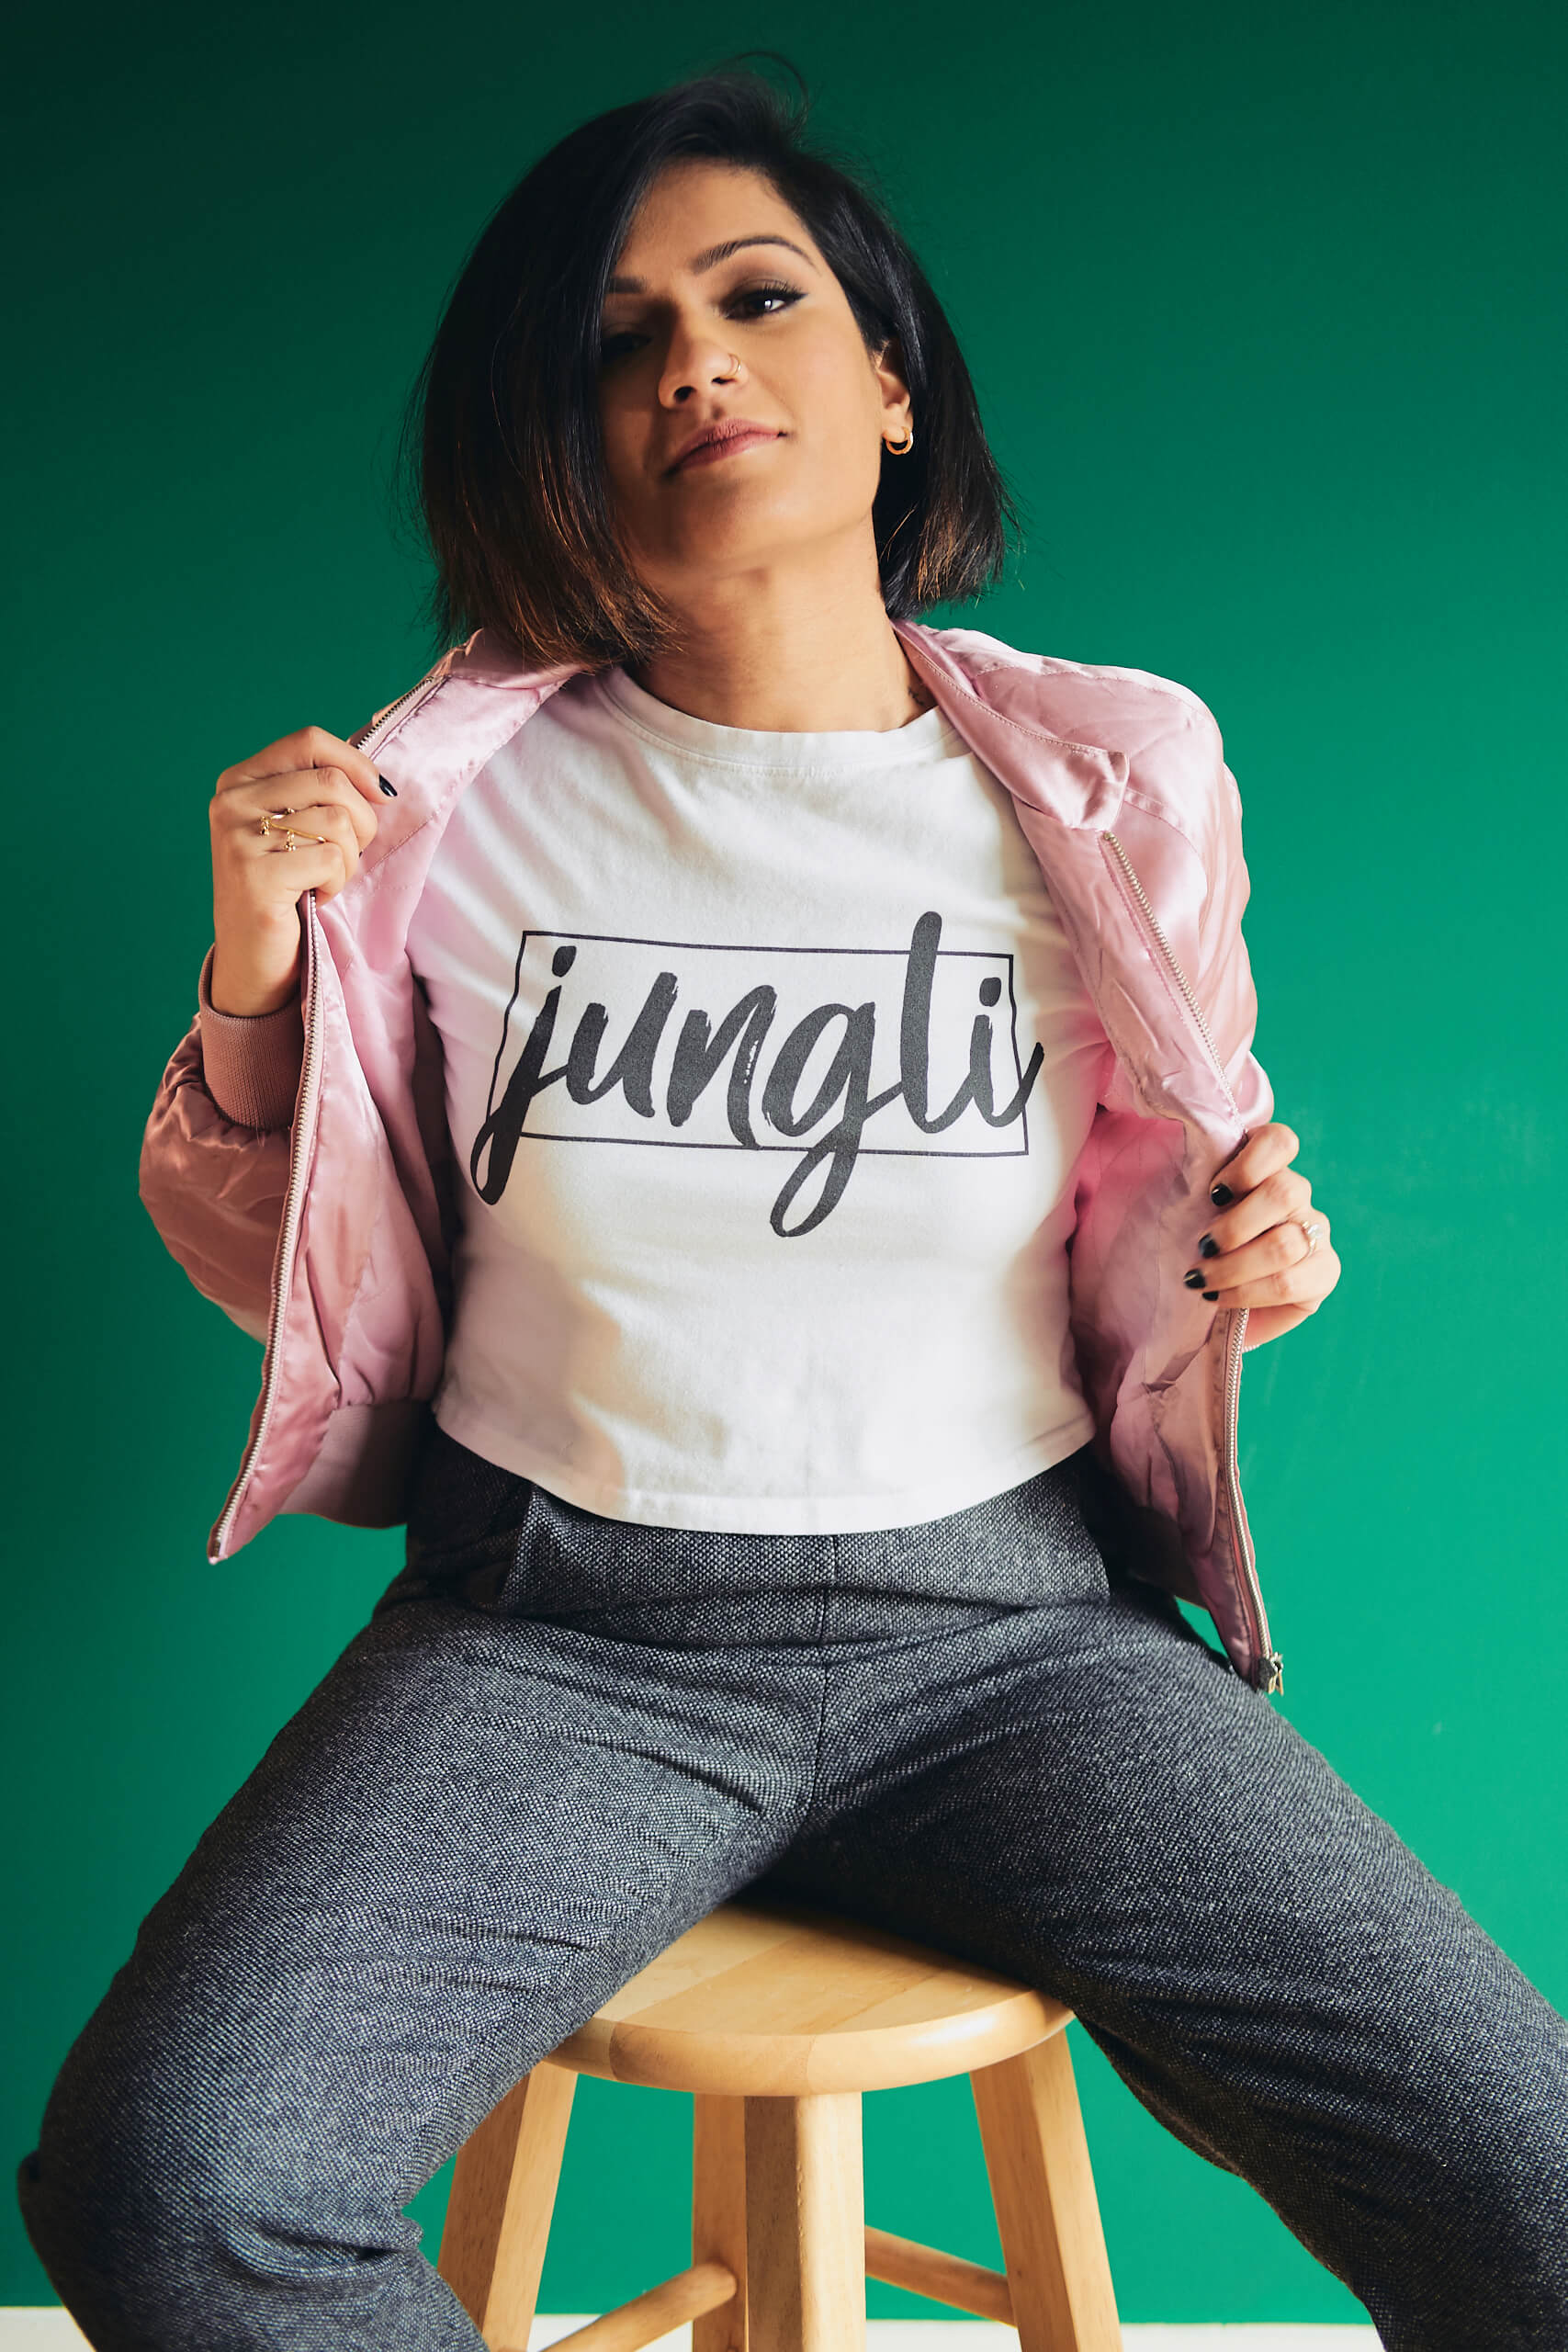 Shreya - Jungli by Nature - Clothing Brand Photography - Fashion Product Photography - Portrait Photography - Studio Fashion Photography - Secaucus, New Jersey